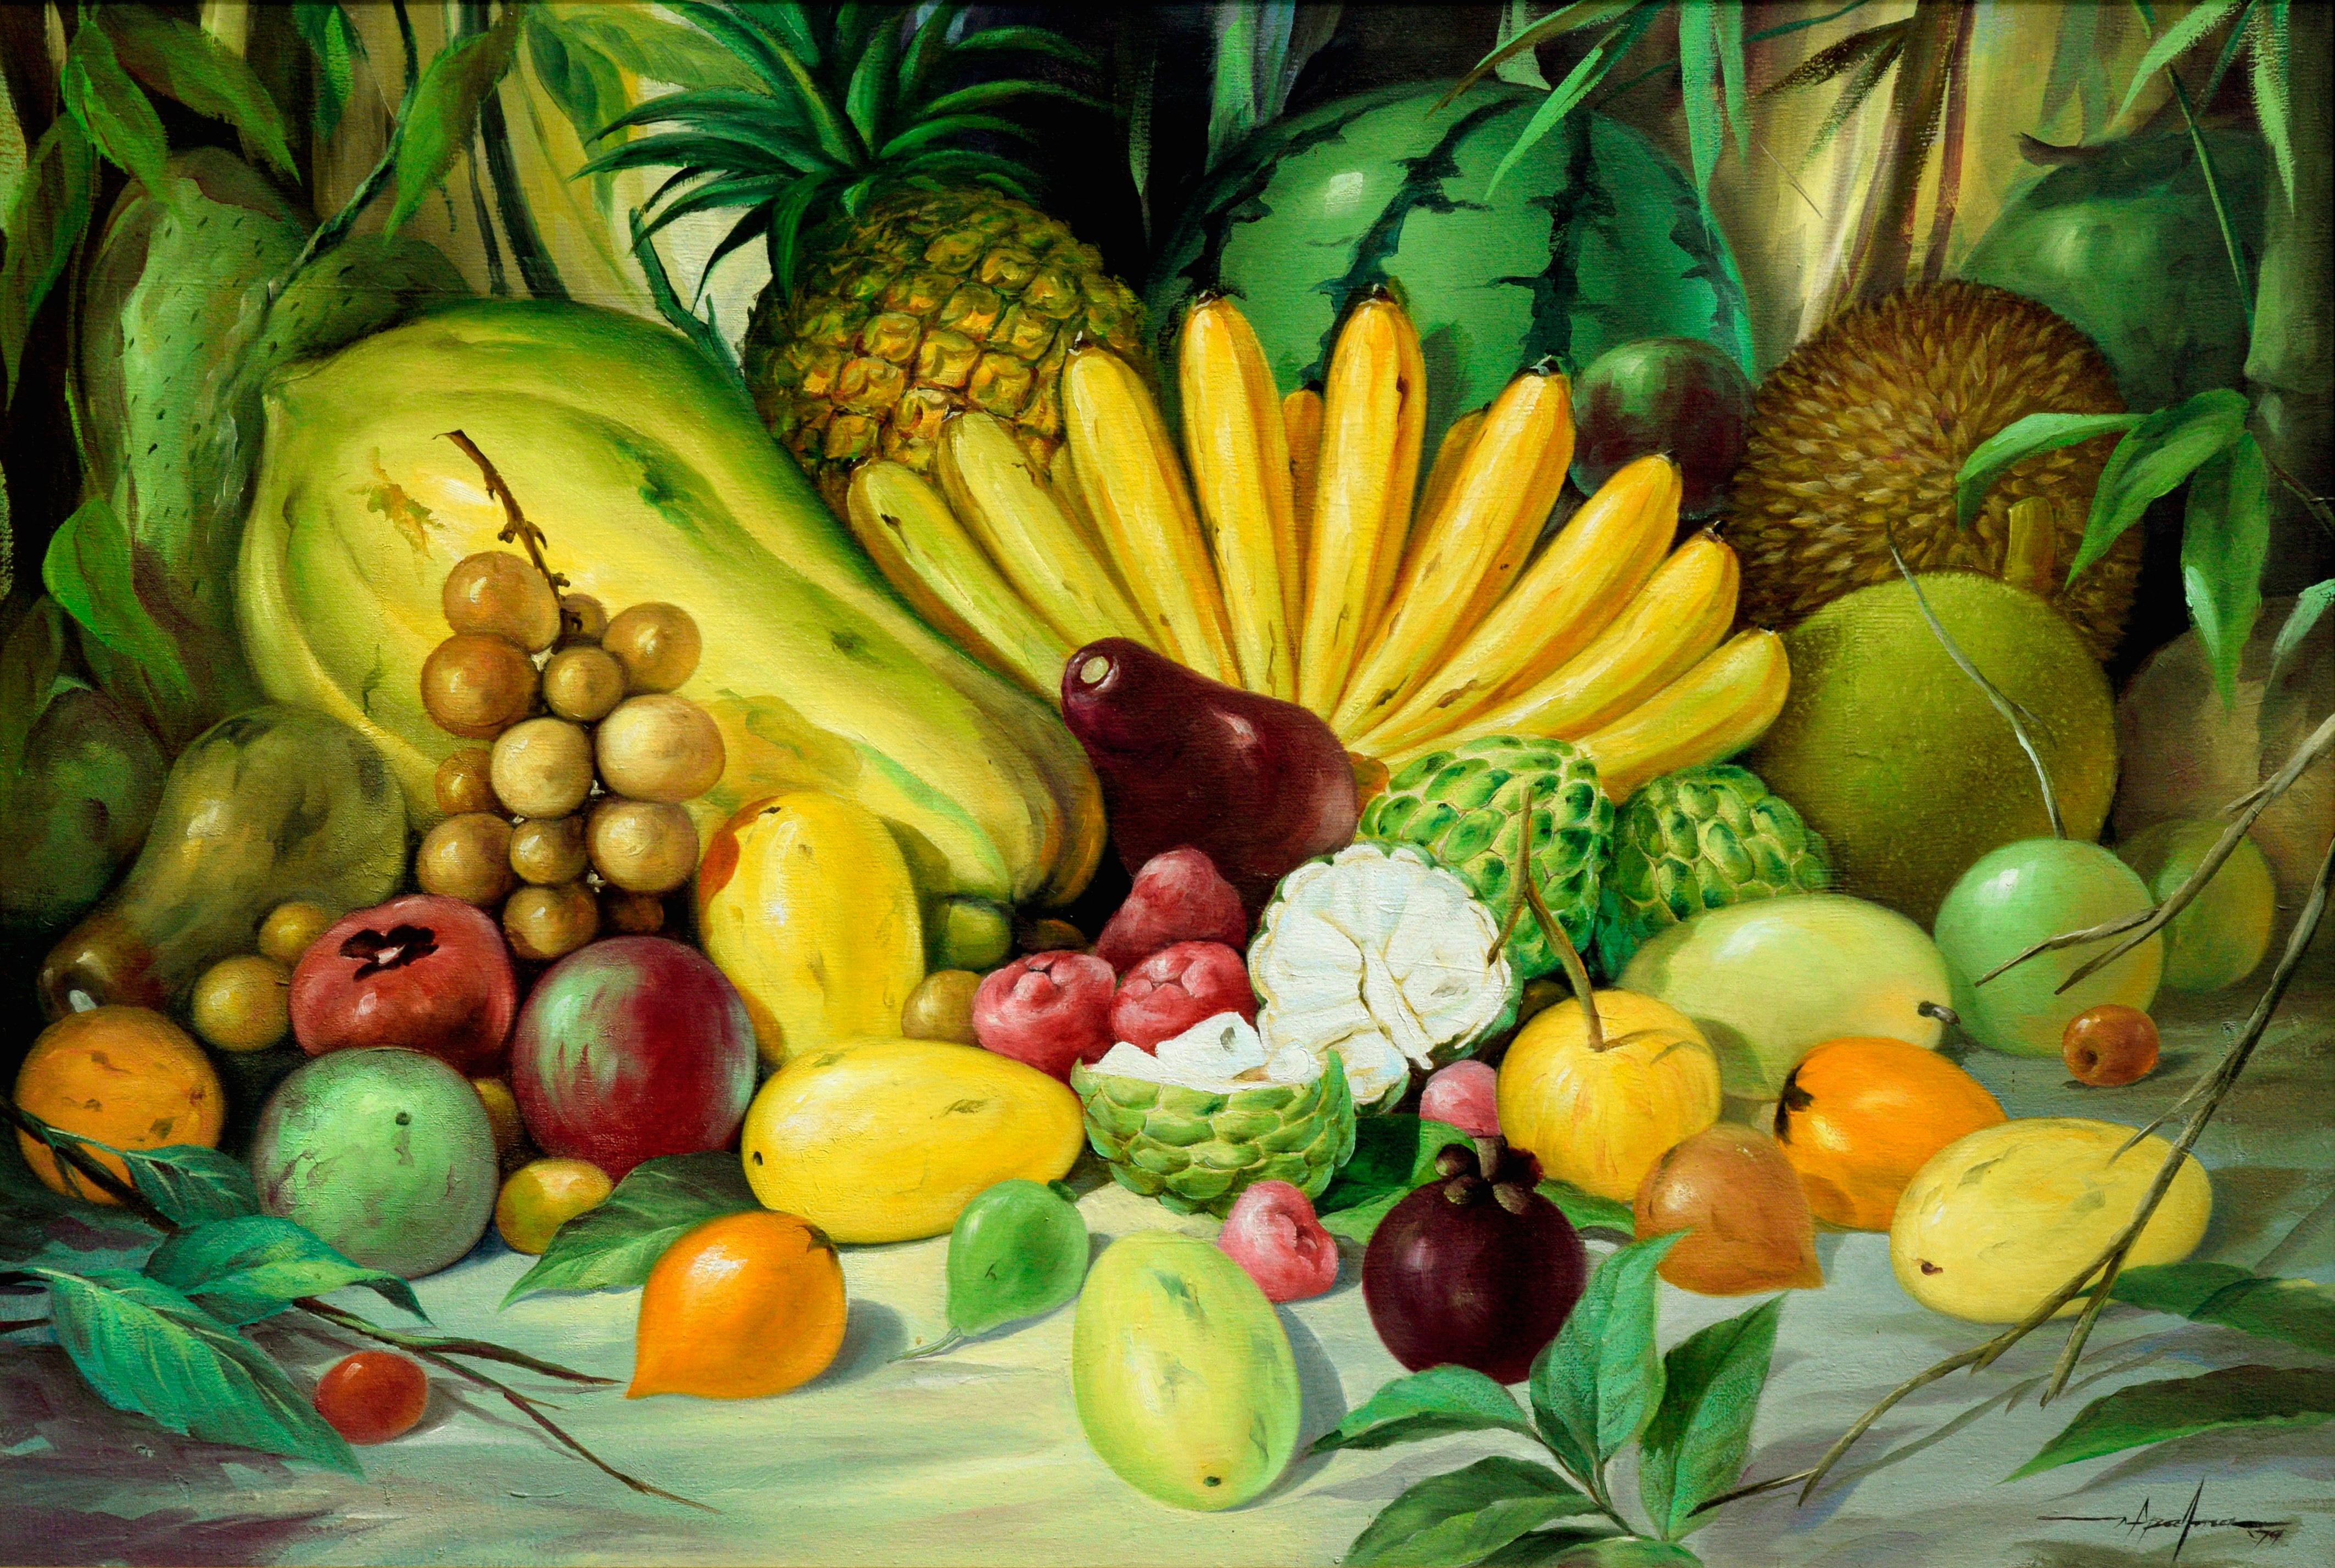 Tropical Fruit Still Life - Painting by Manuel Fernando de Palma